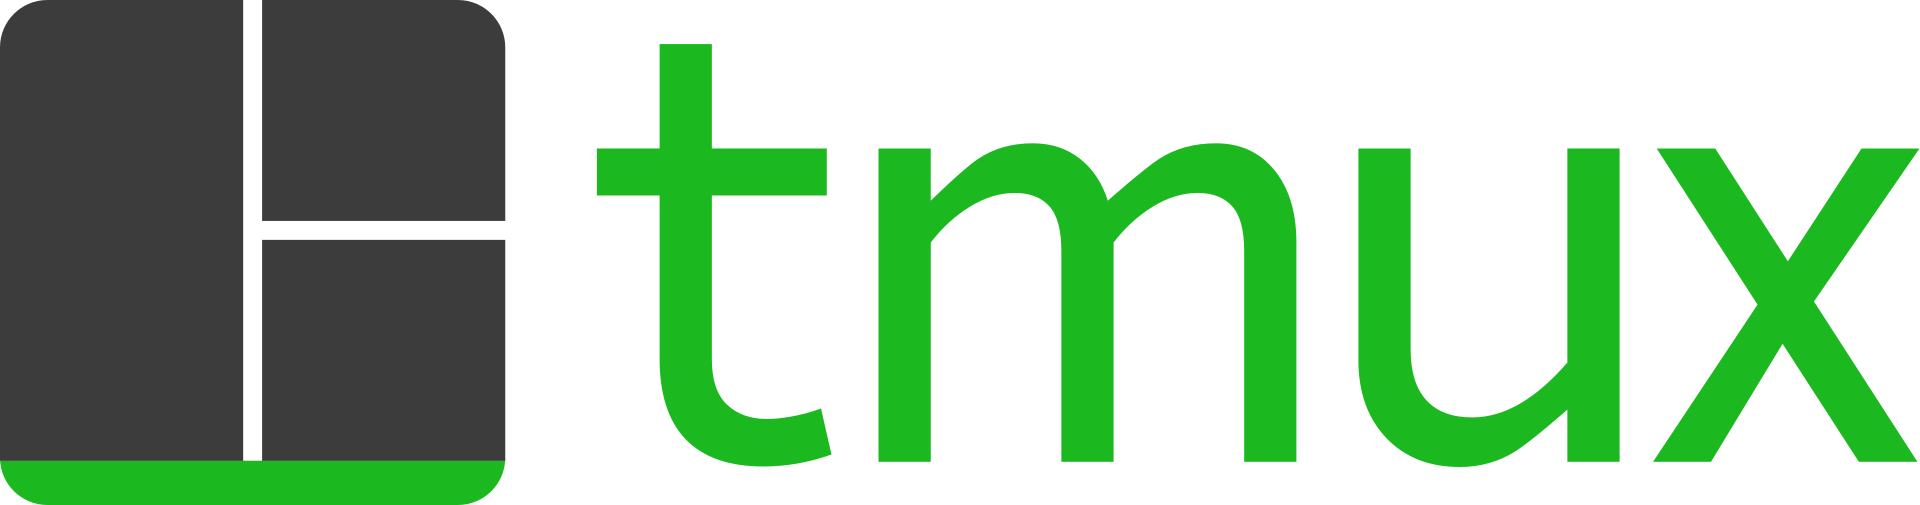 Tmux logo.svg